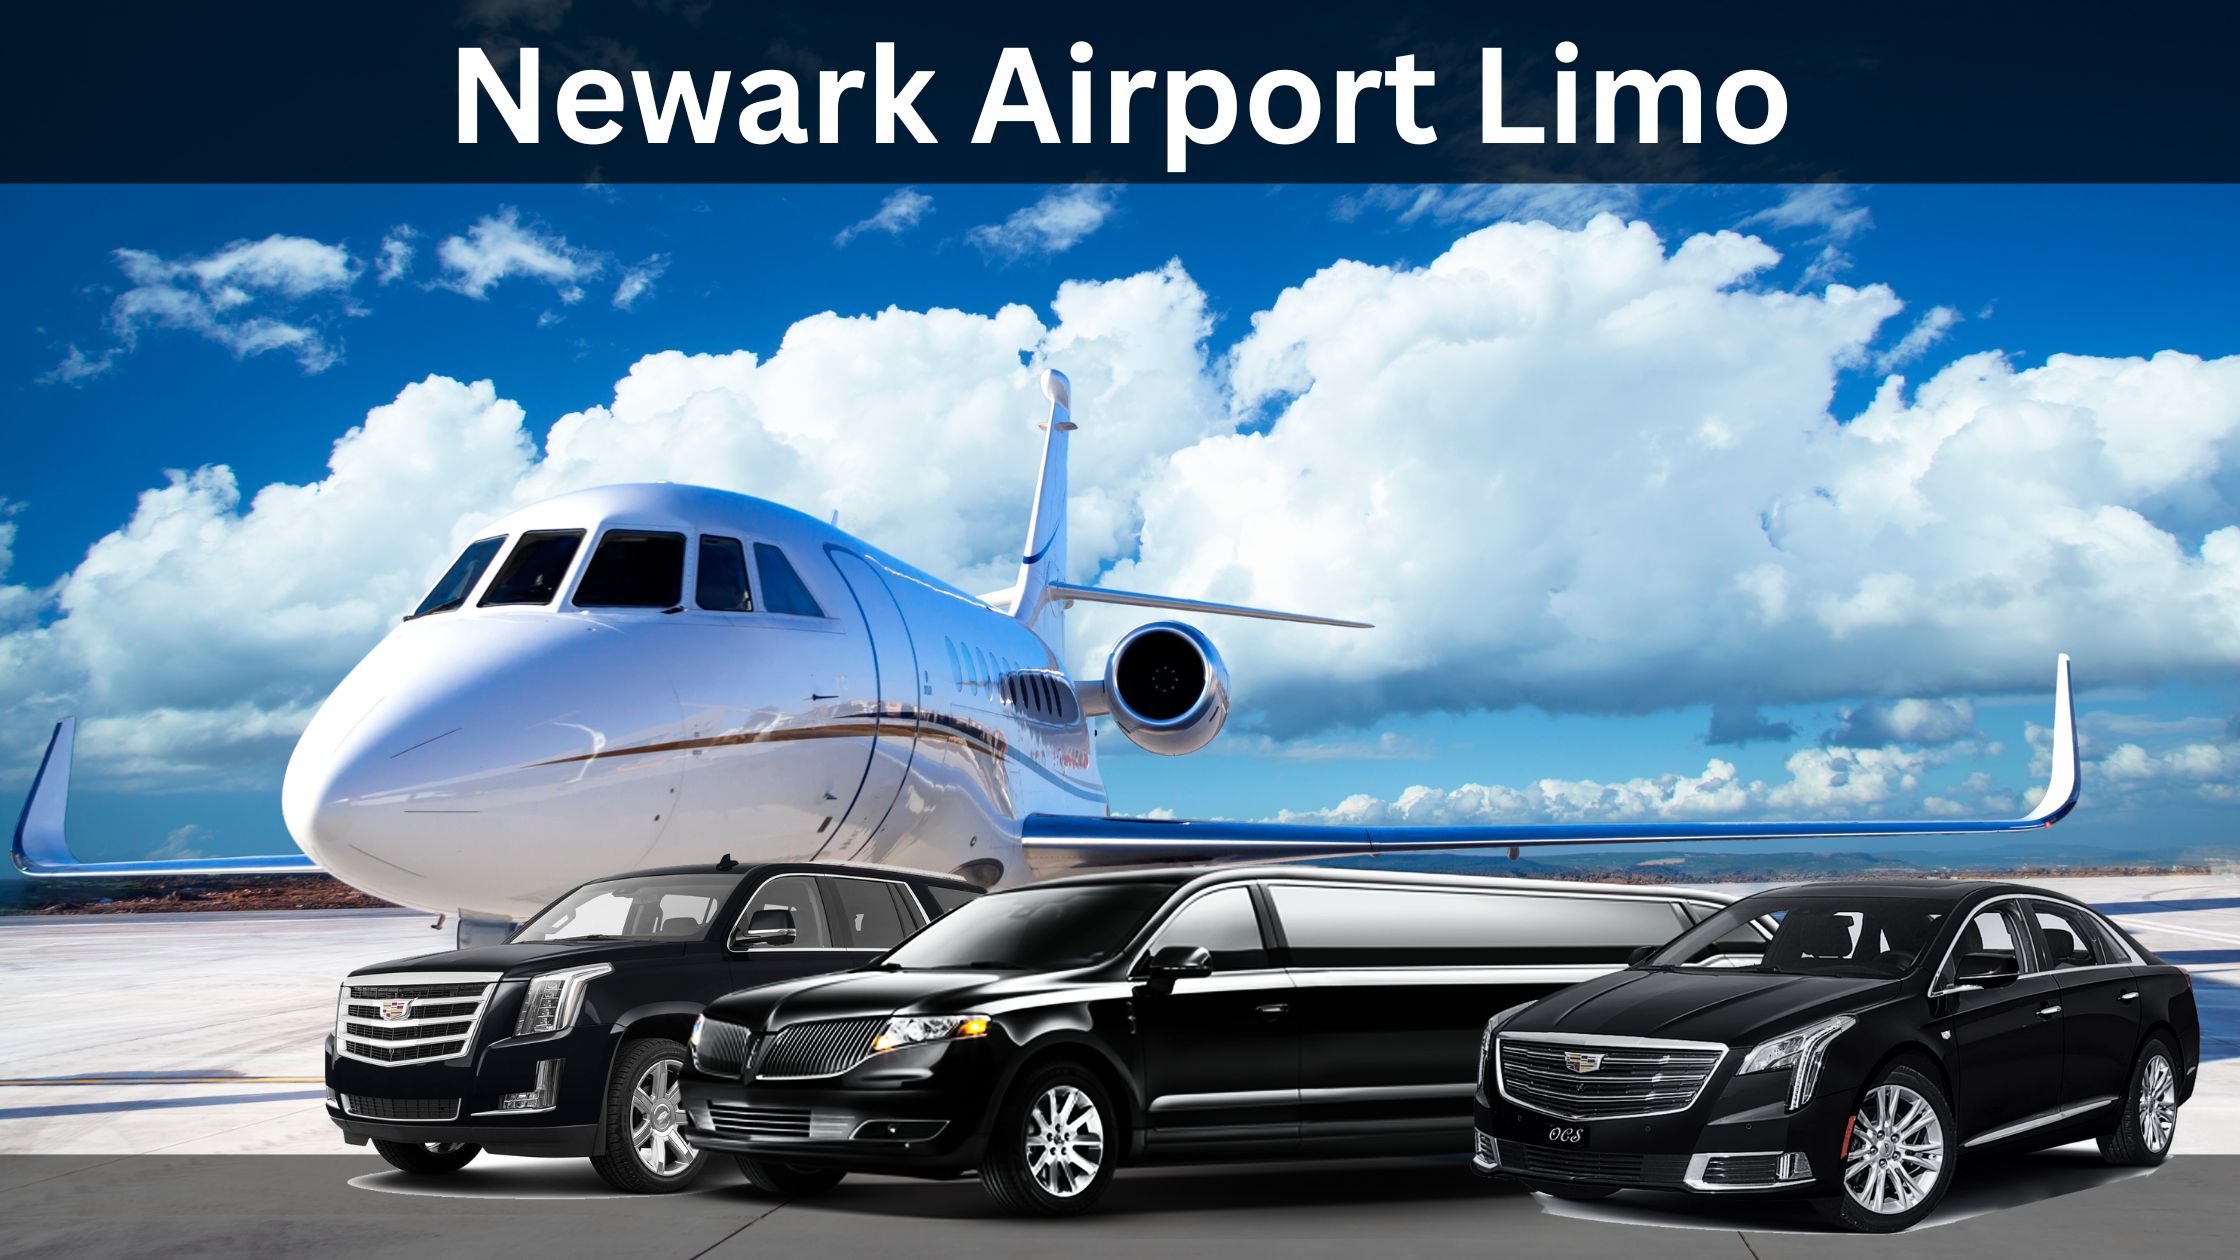 Newark Airport Limo